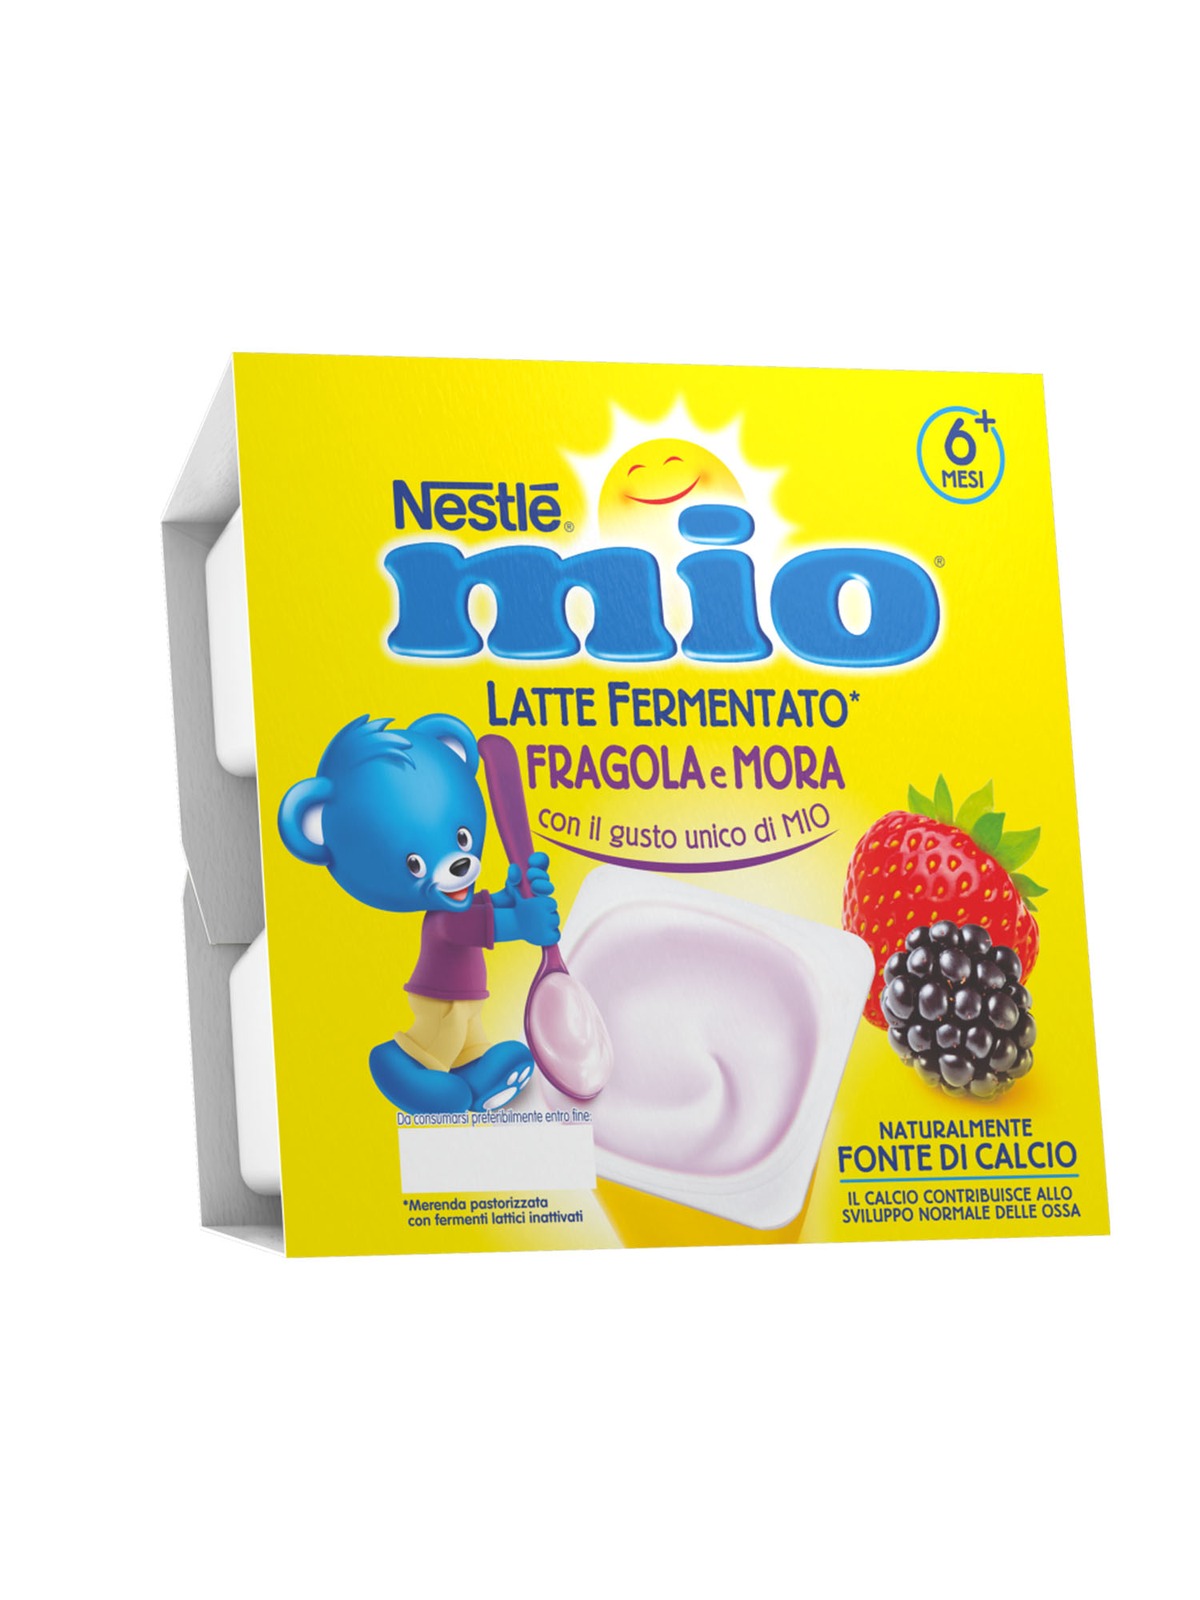 Nestle' mio merenda latte fermentato fragola e mora - Nestlé Mio